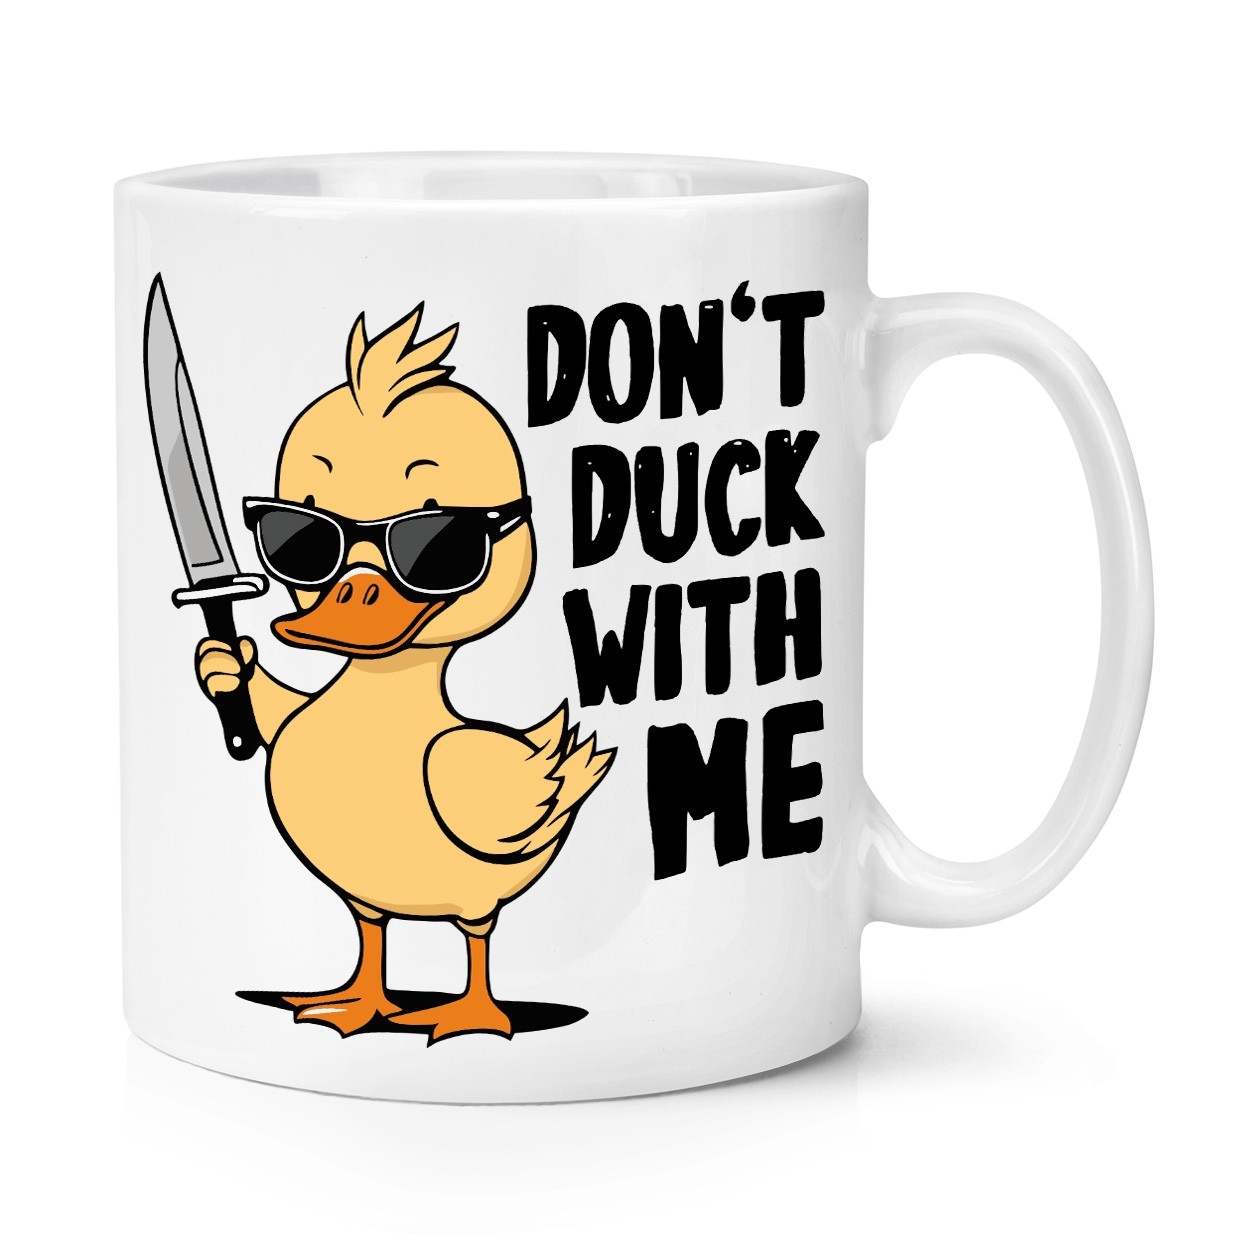 Don't Duck With Me 10oz Mug Cup Funny Joke Rude Birthday Parody